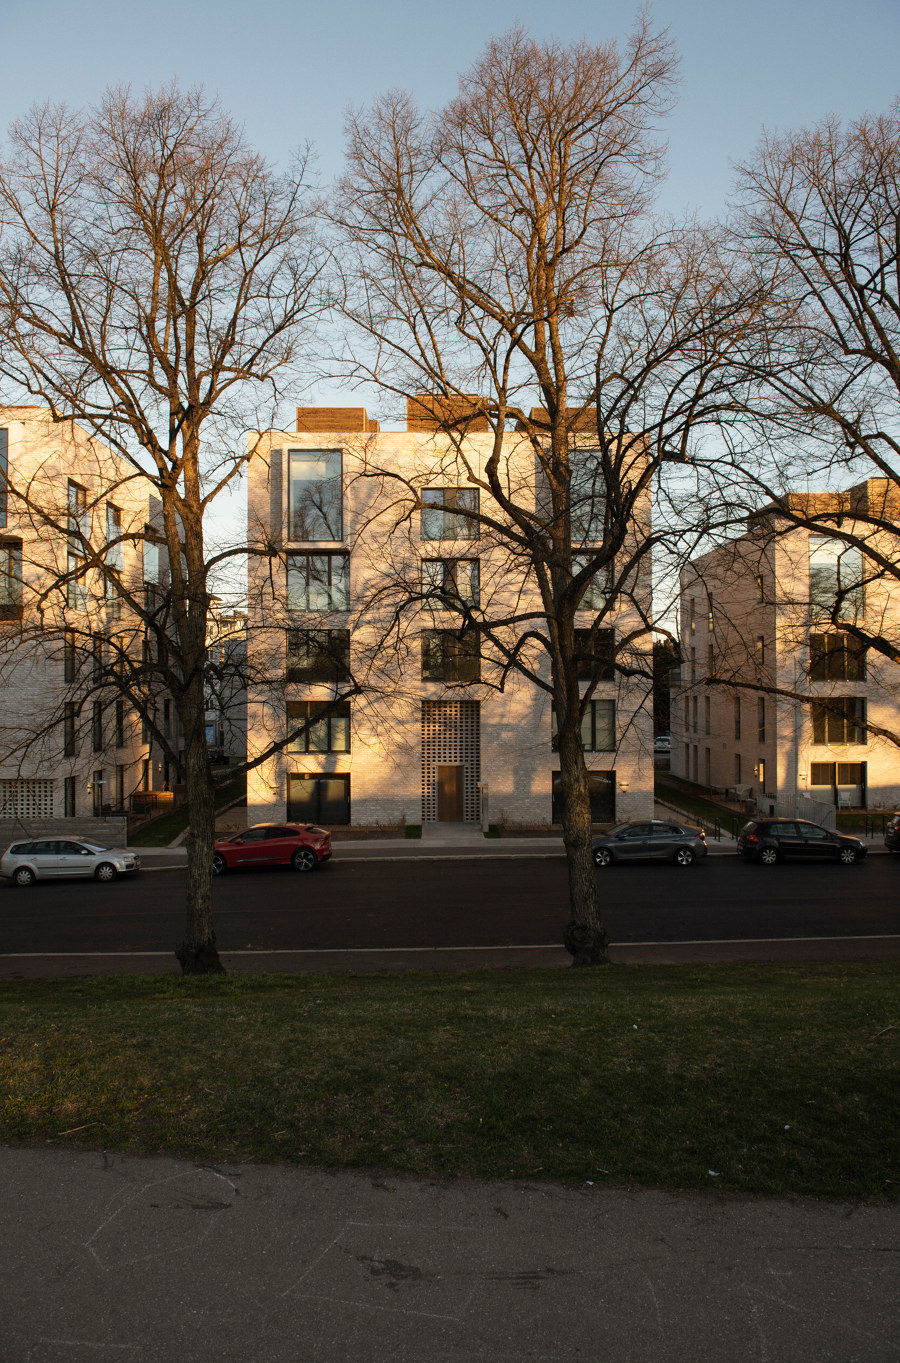 Pilestredet 77-79 by Reiulf Ramstad Arkitekter | Apartment blocks